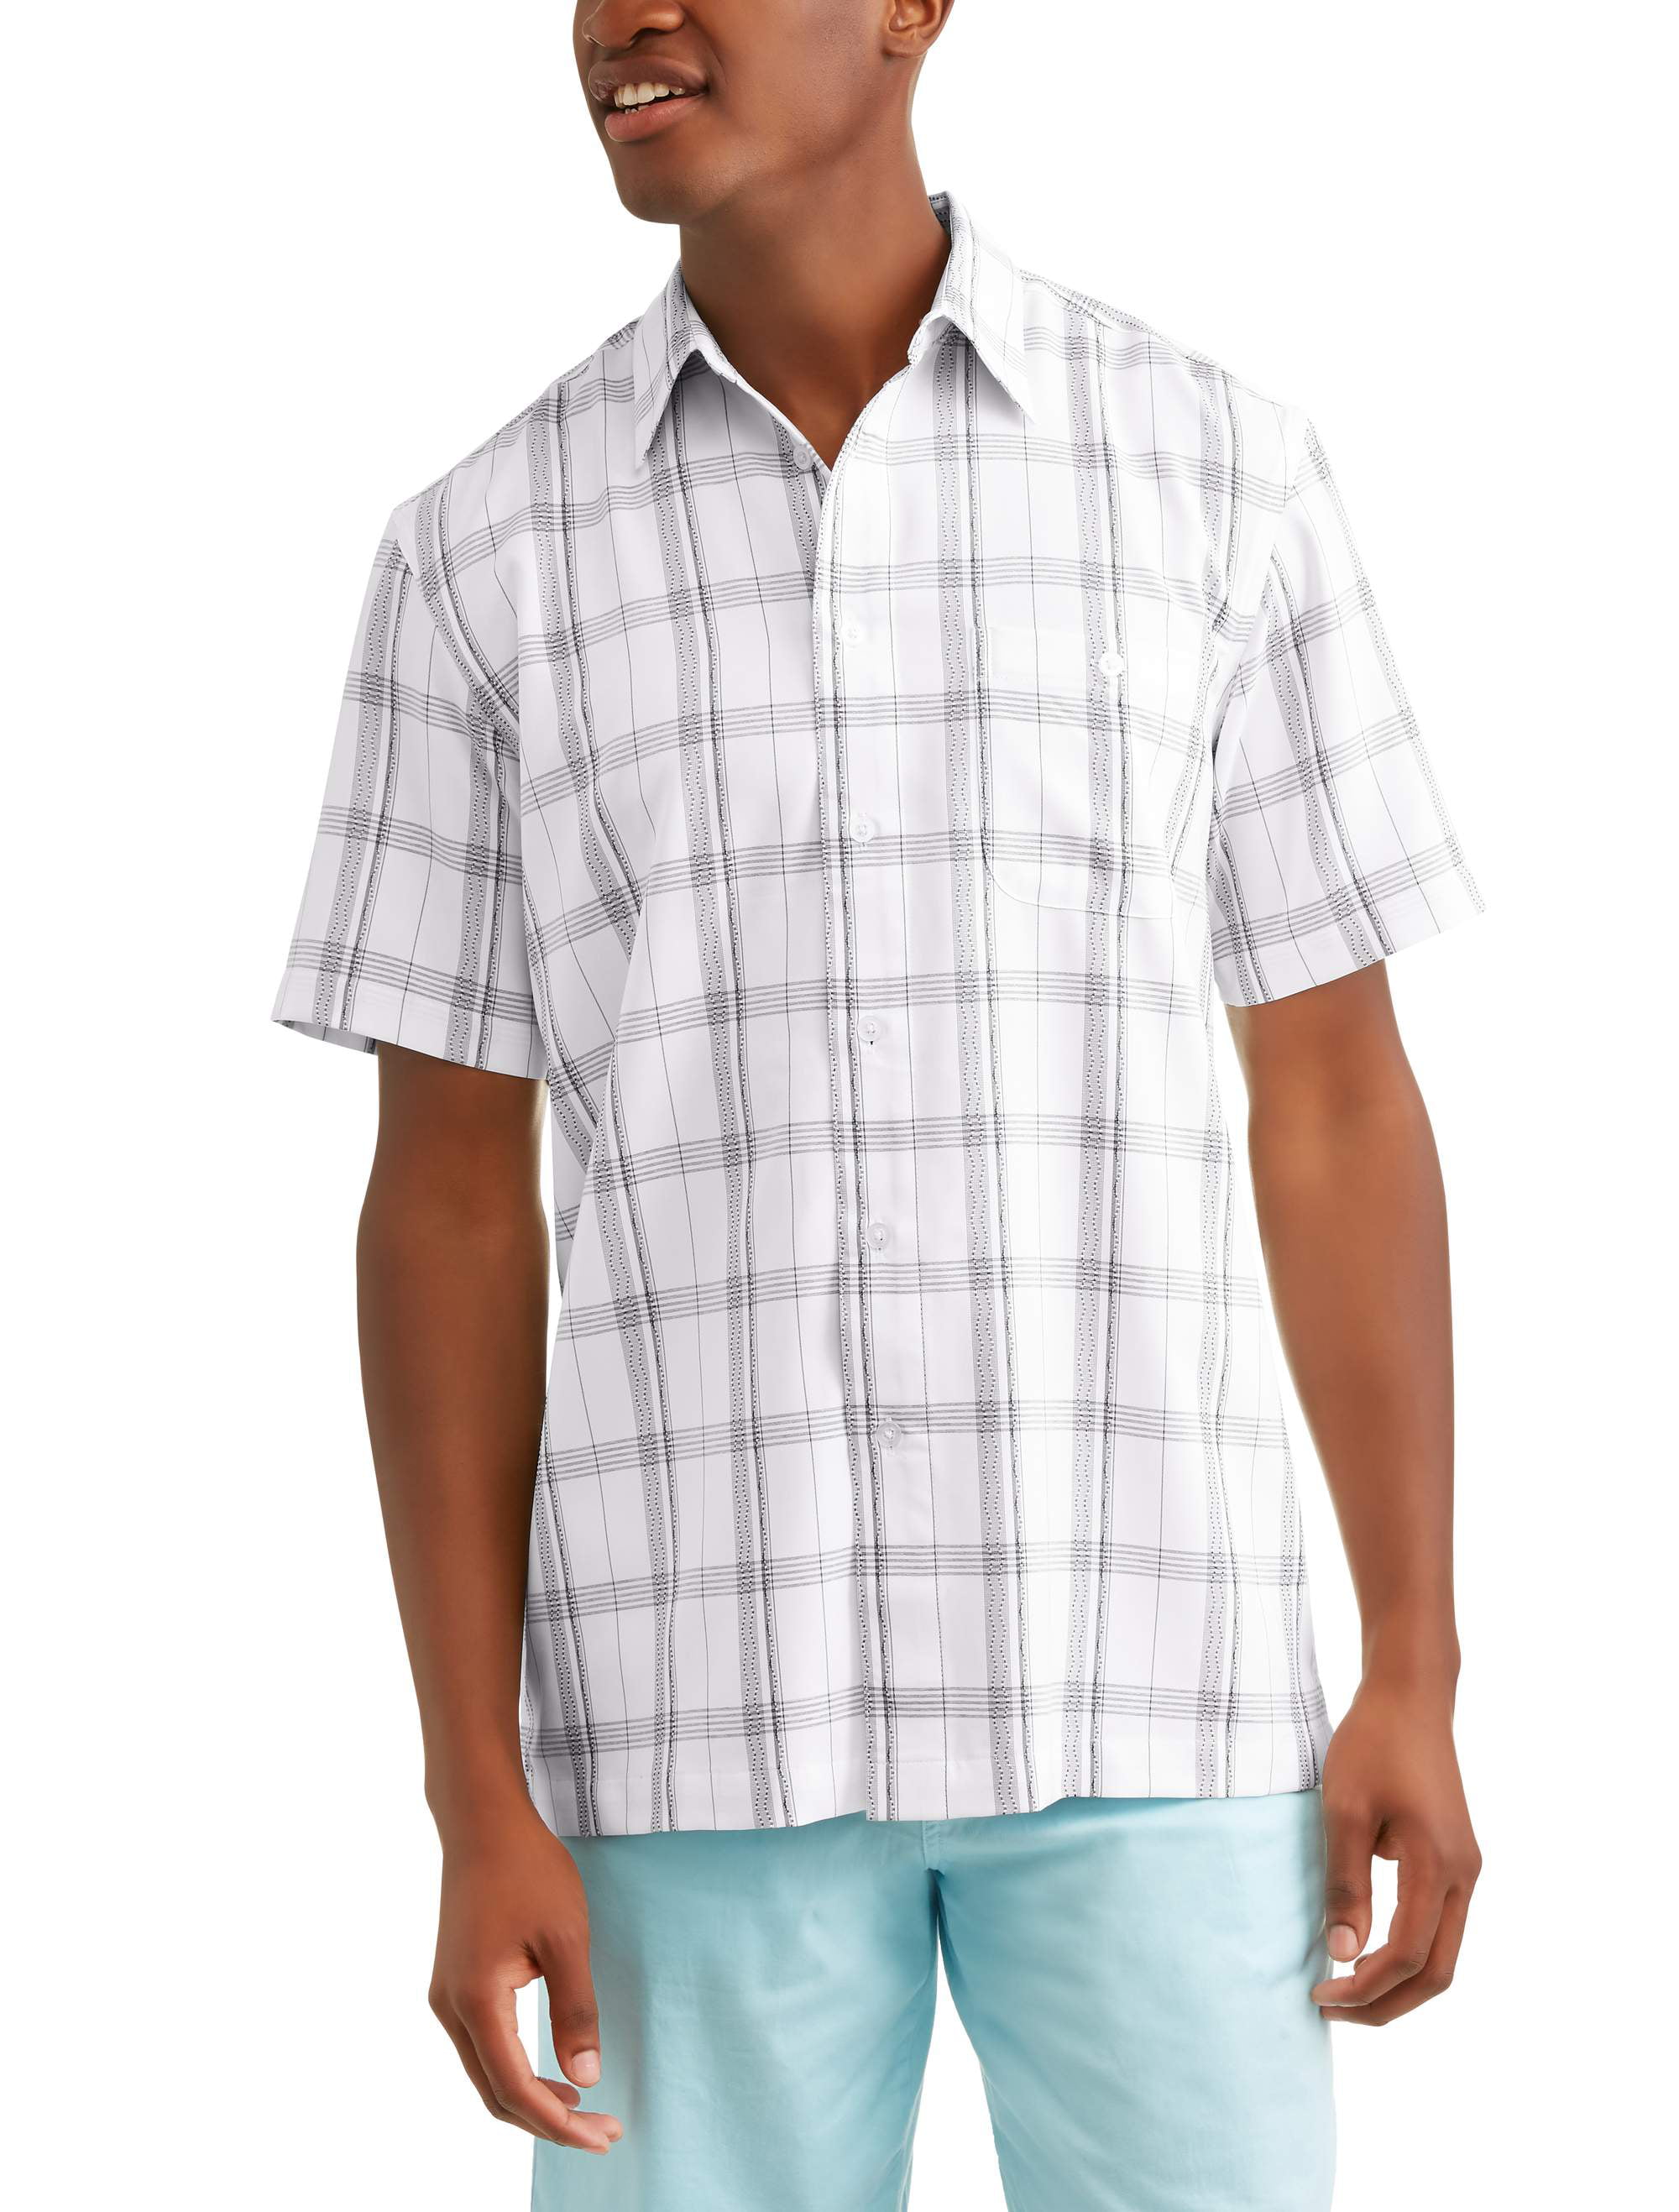 Big and Tall Men's Short Sleeve Microfiber Shirt - Walmart.com